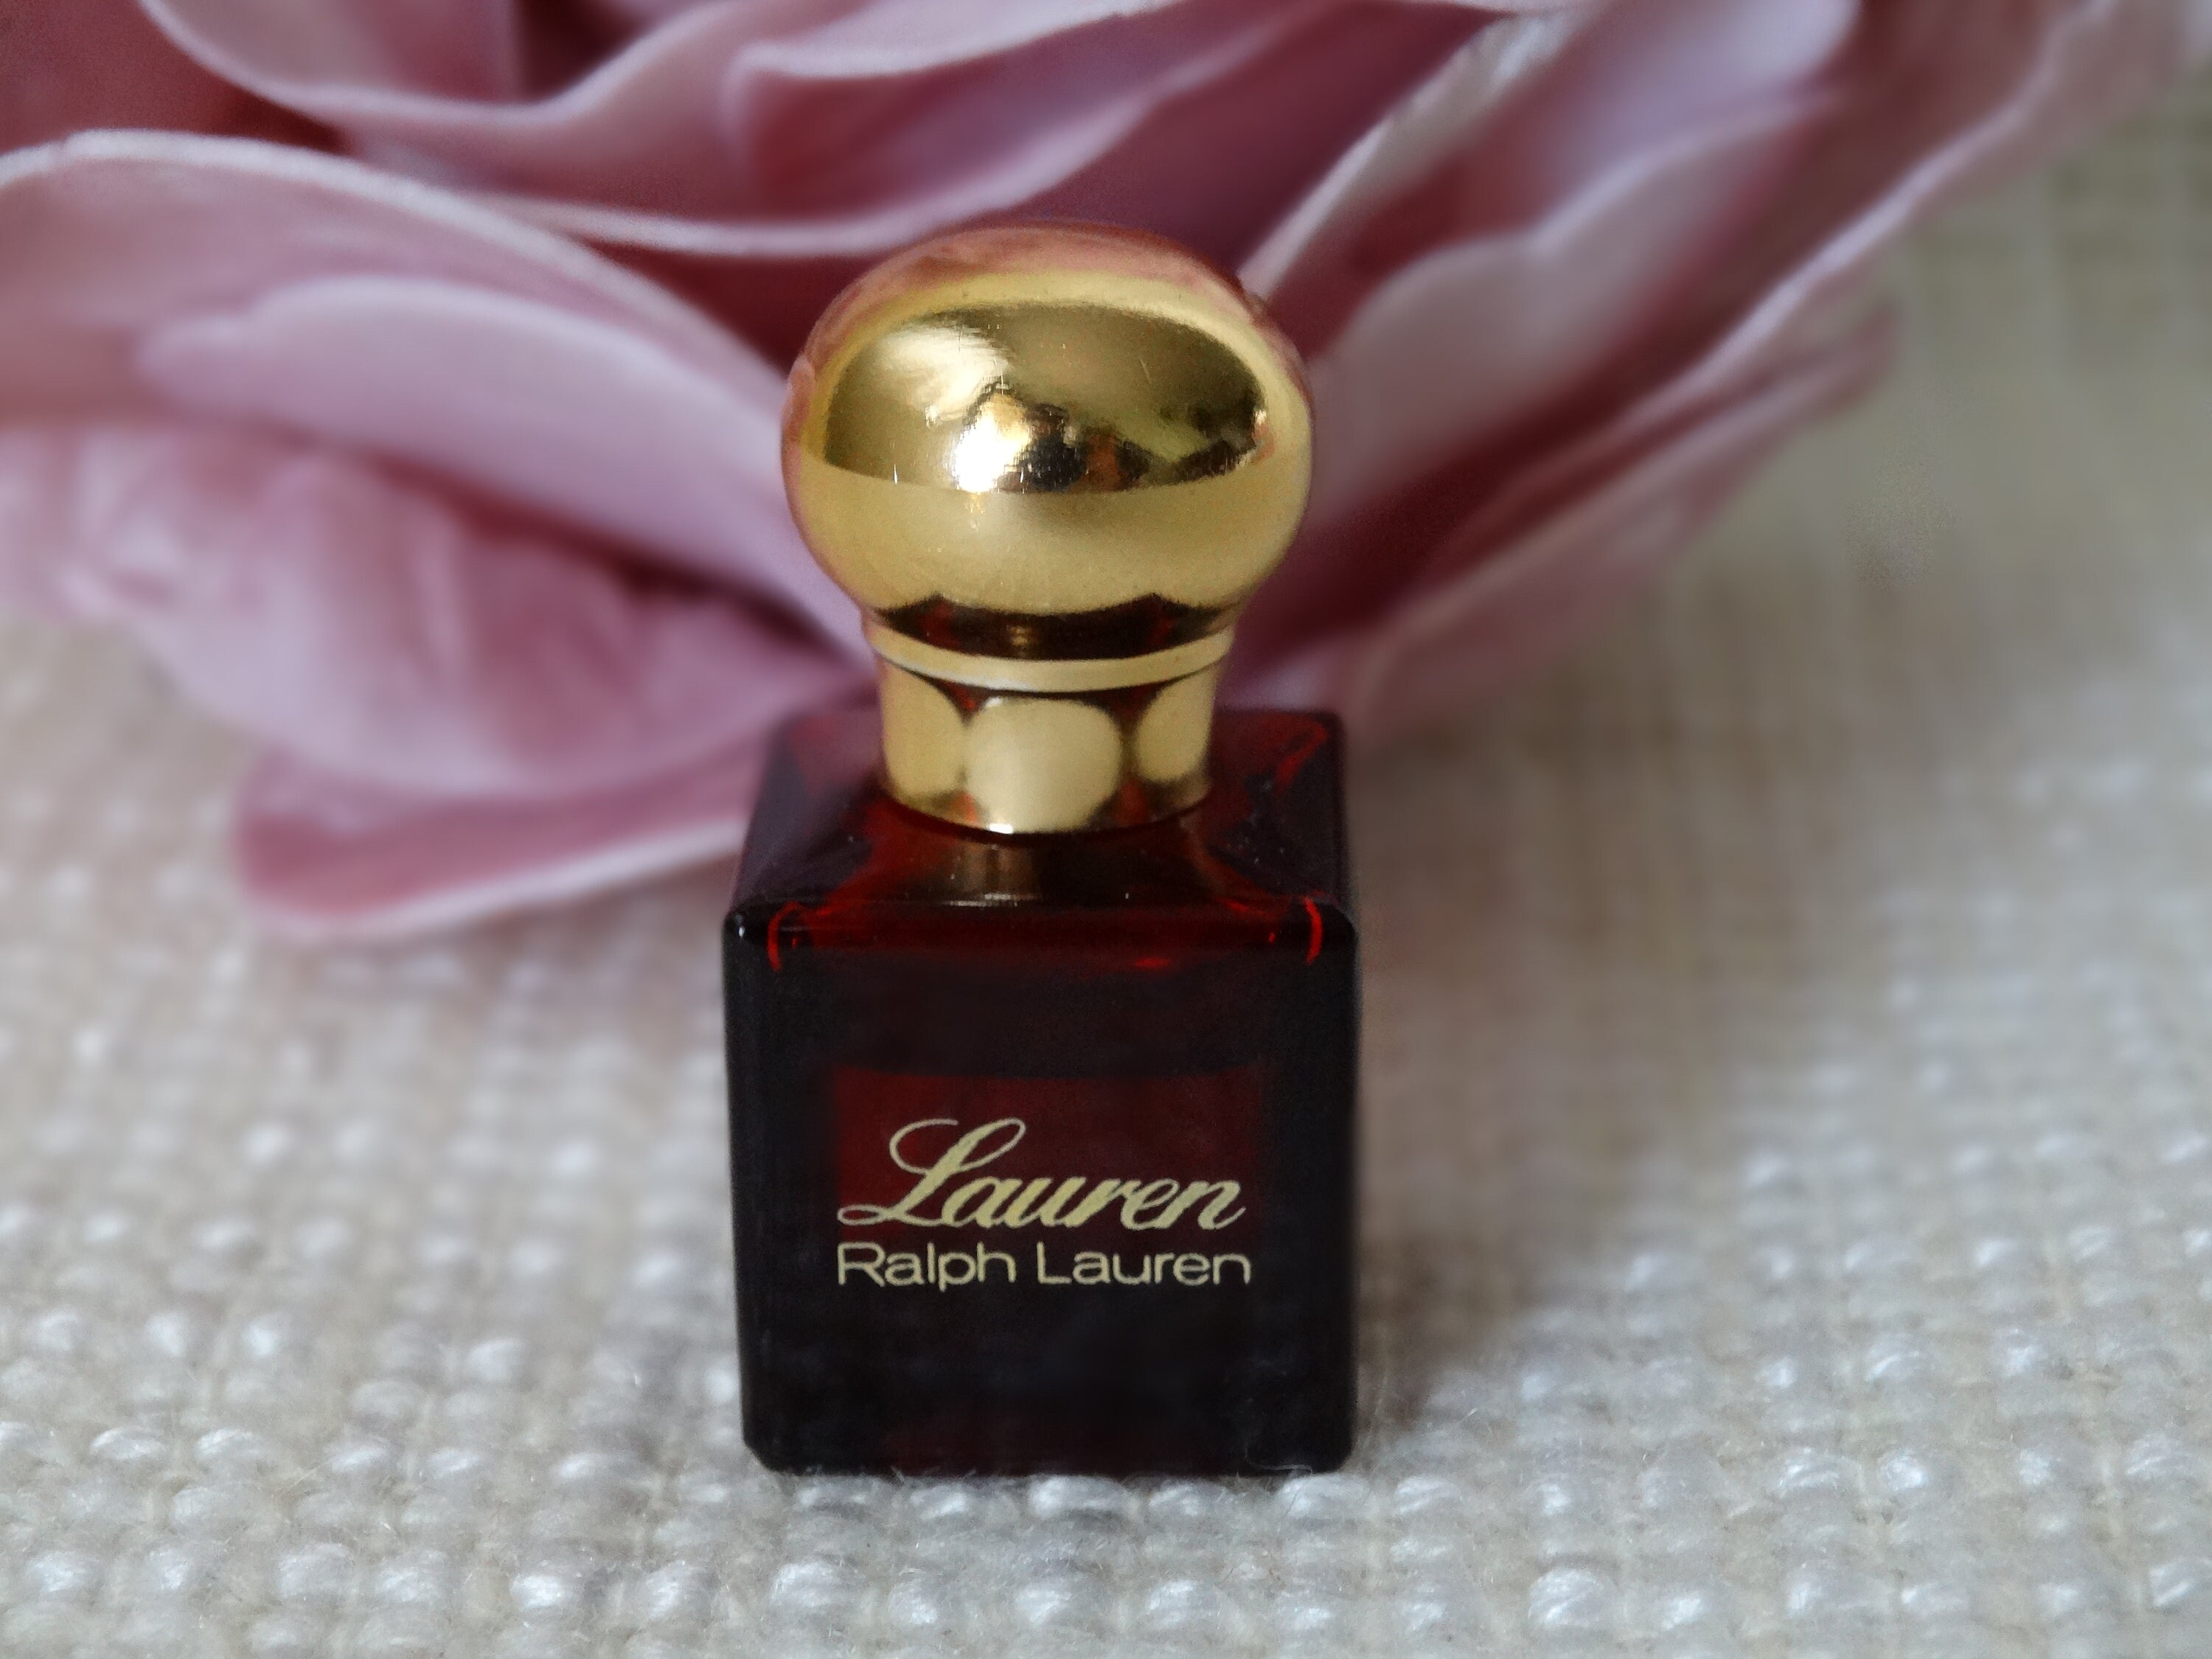 Lauren Ralph Lauren perfume - a fragrance for women 1978